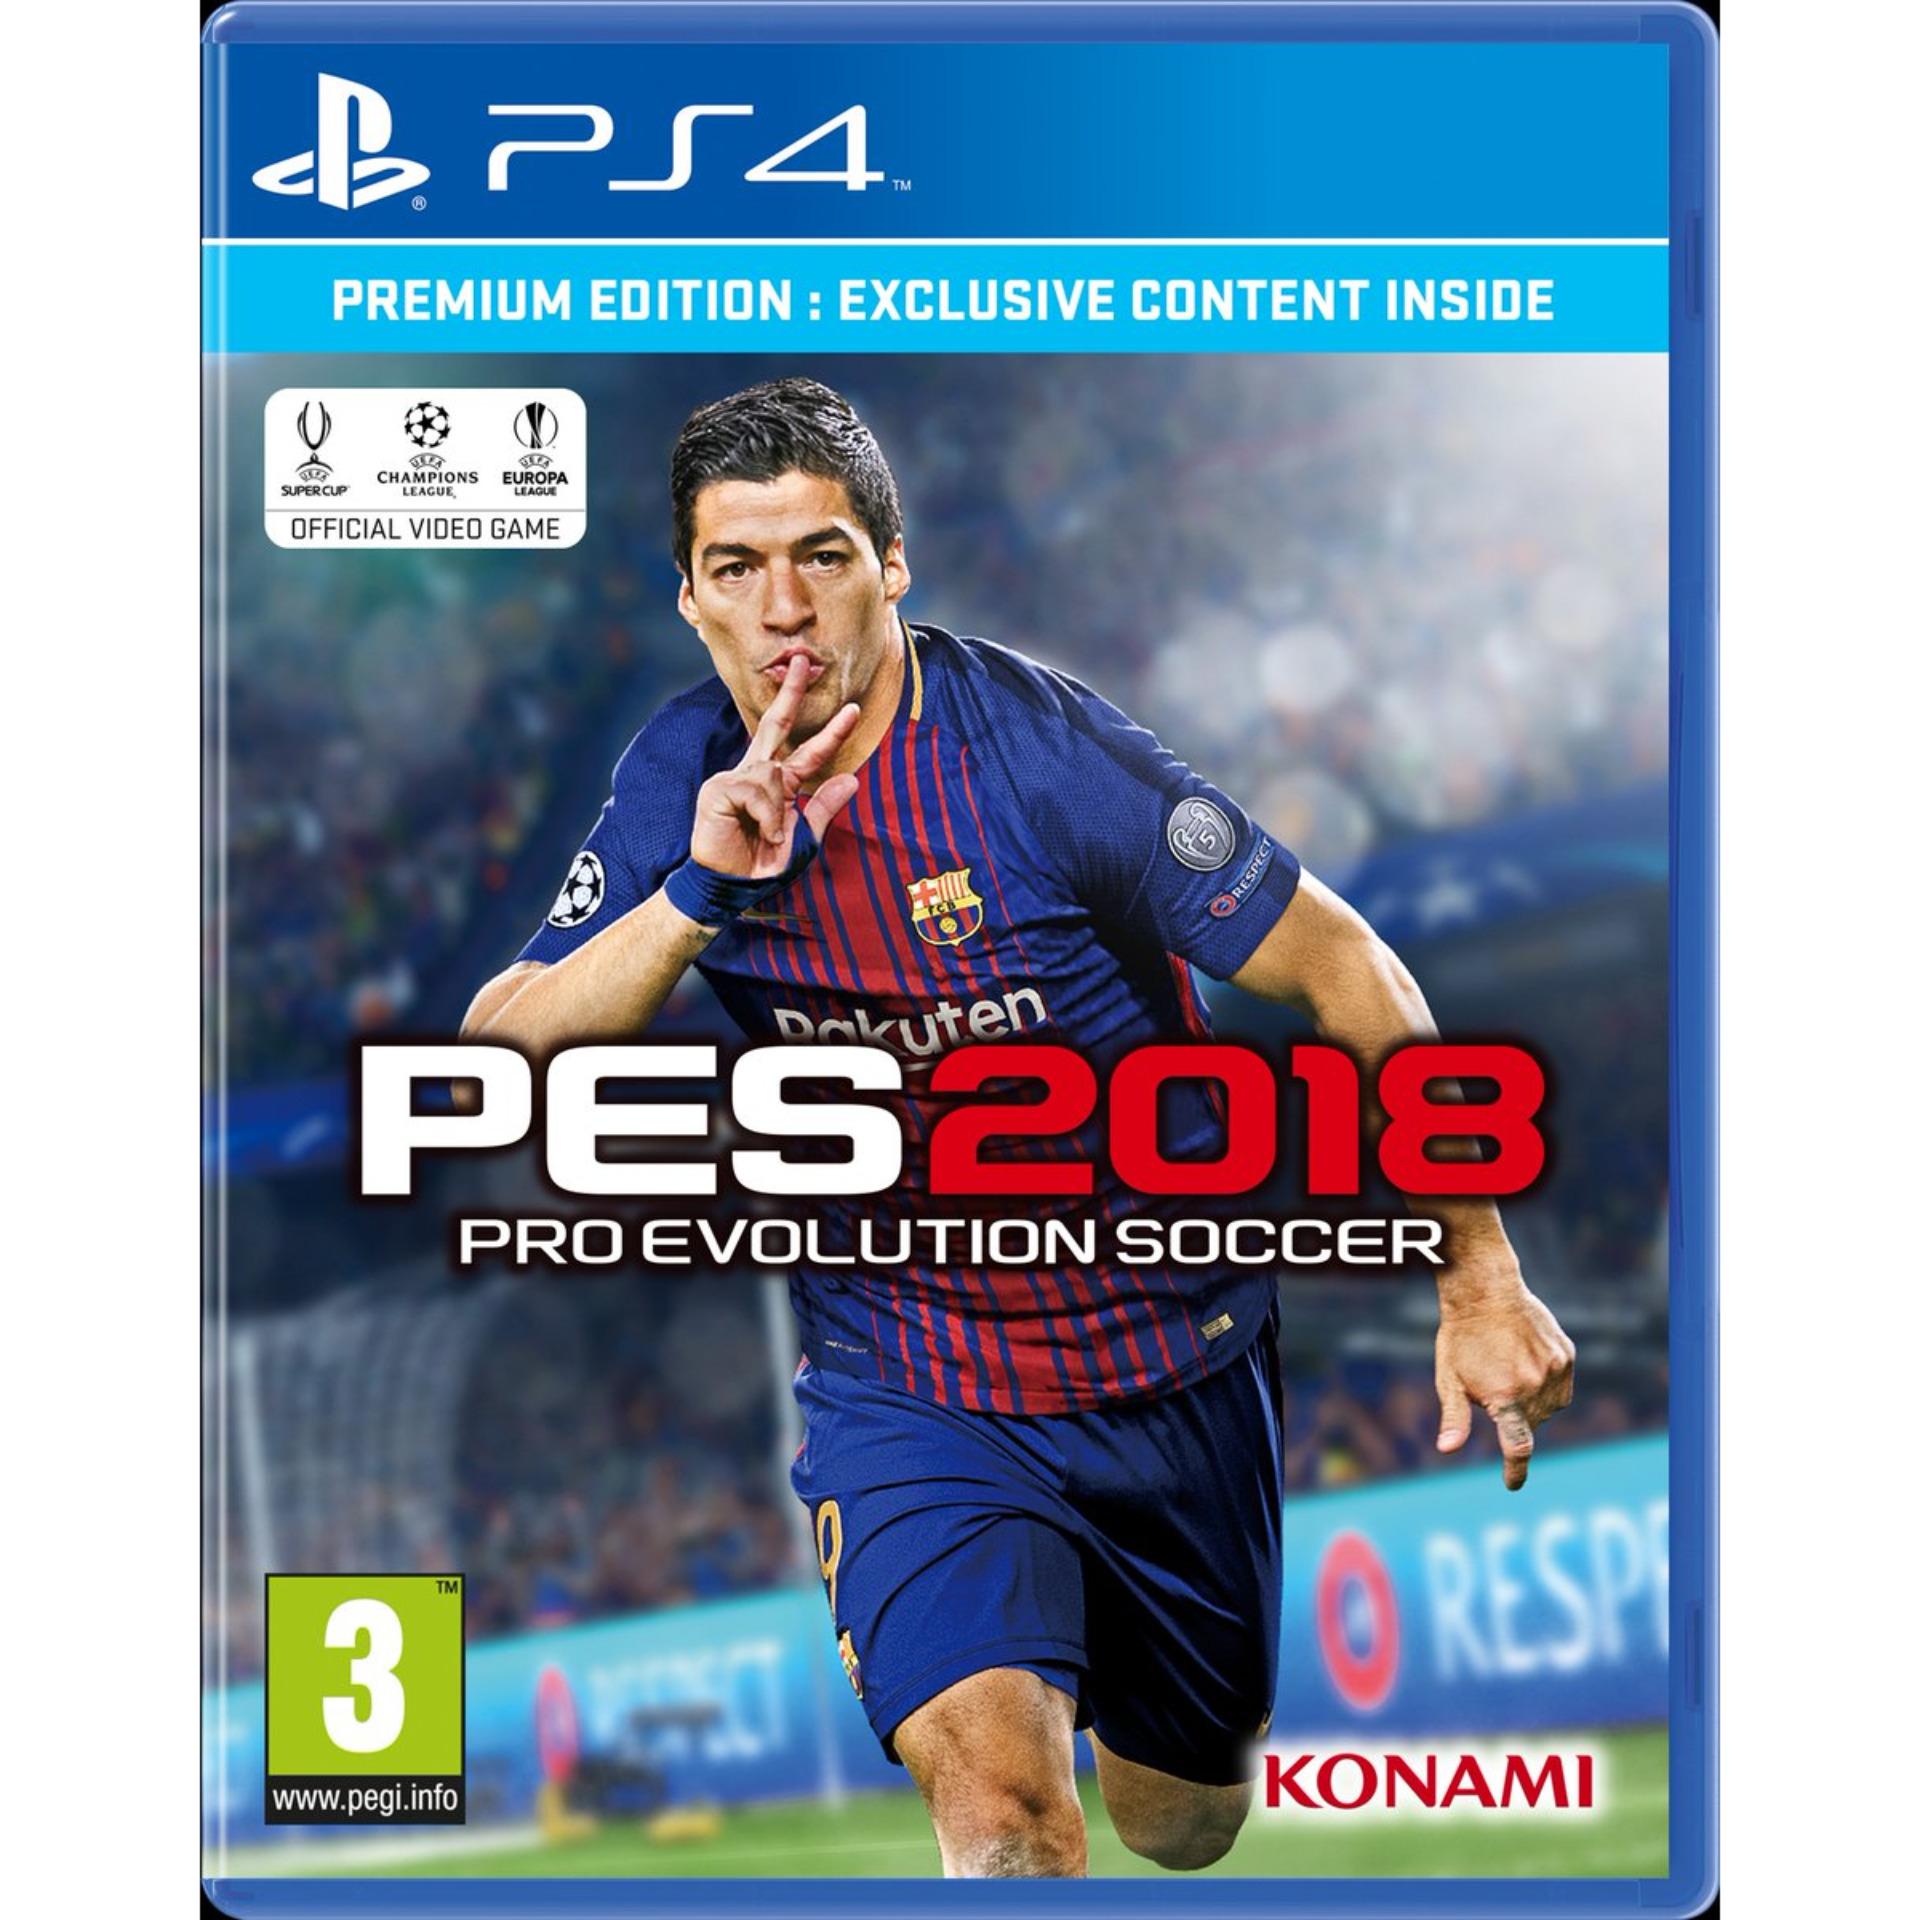 Đĩa game PS4 Pro Evolution Soccer PES 2018 Premium Edition